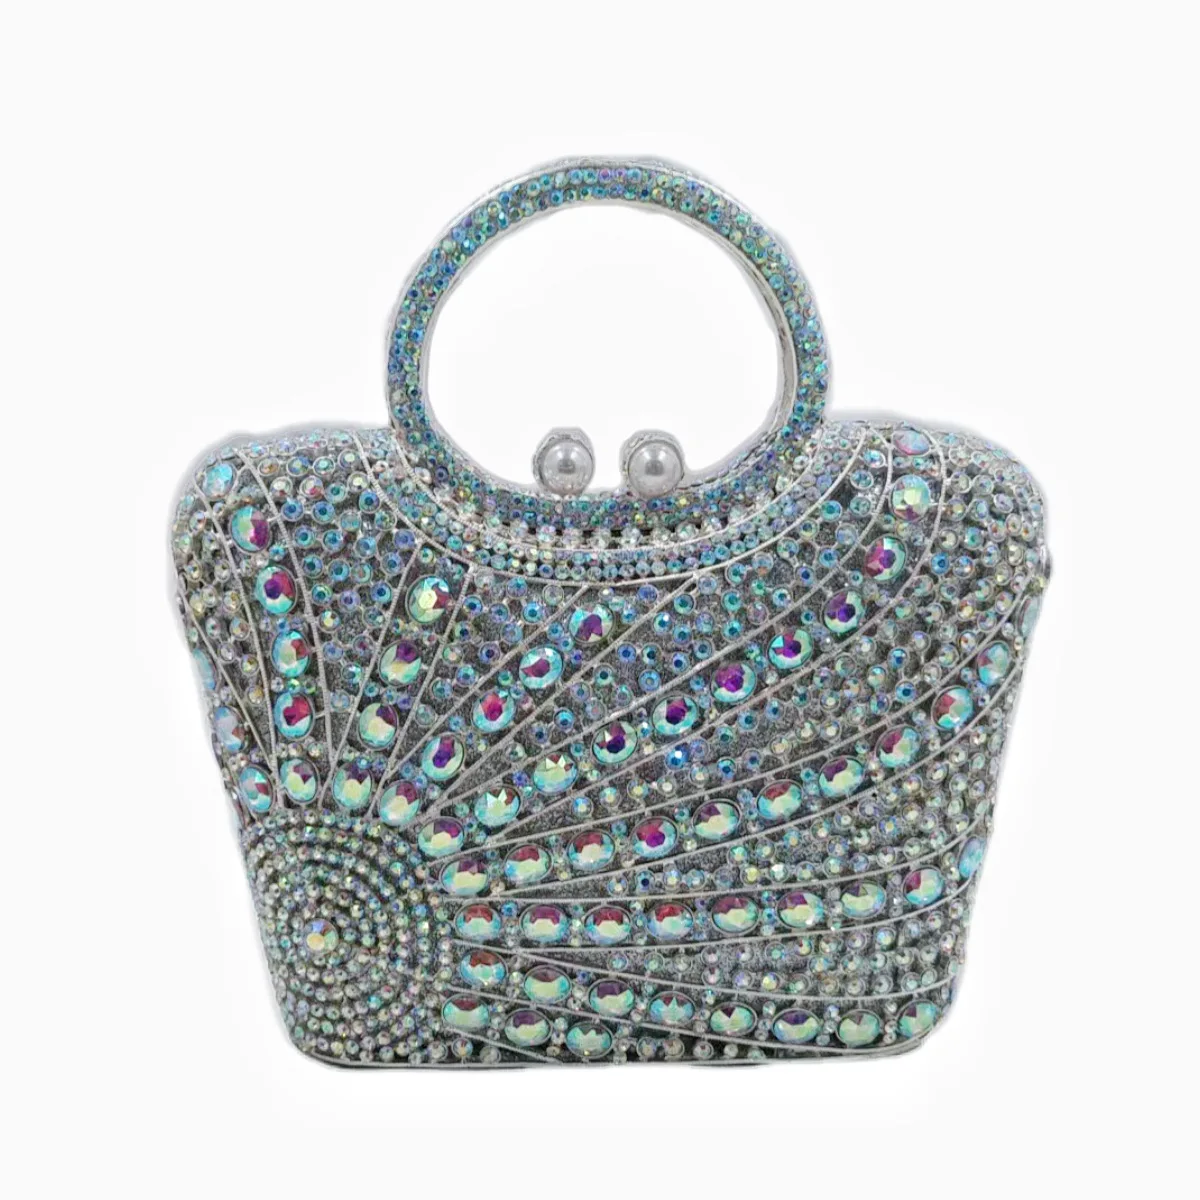 Amiqi MRY117 Luxury Classy Bling Crystal Rhinestone Wedding Party Ladies Clutch Purse Bag Evening Bags for Women